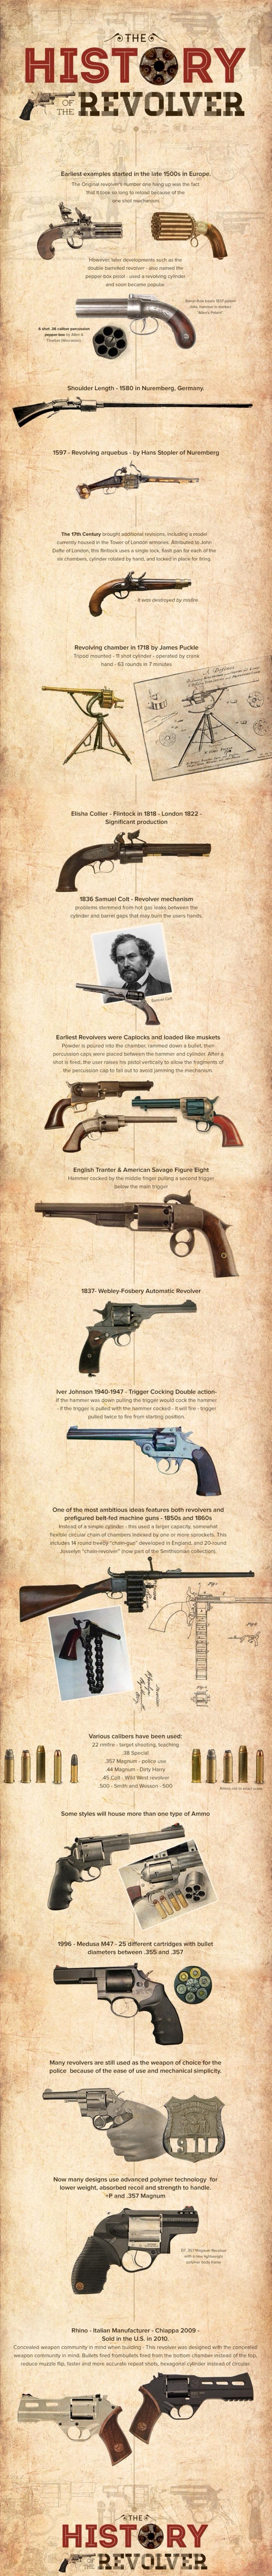 Revolver History